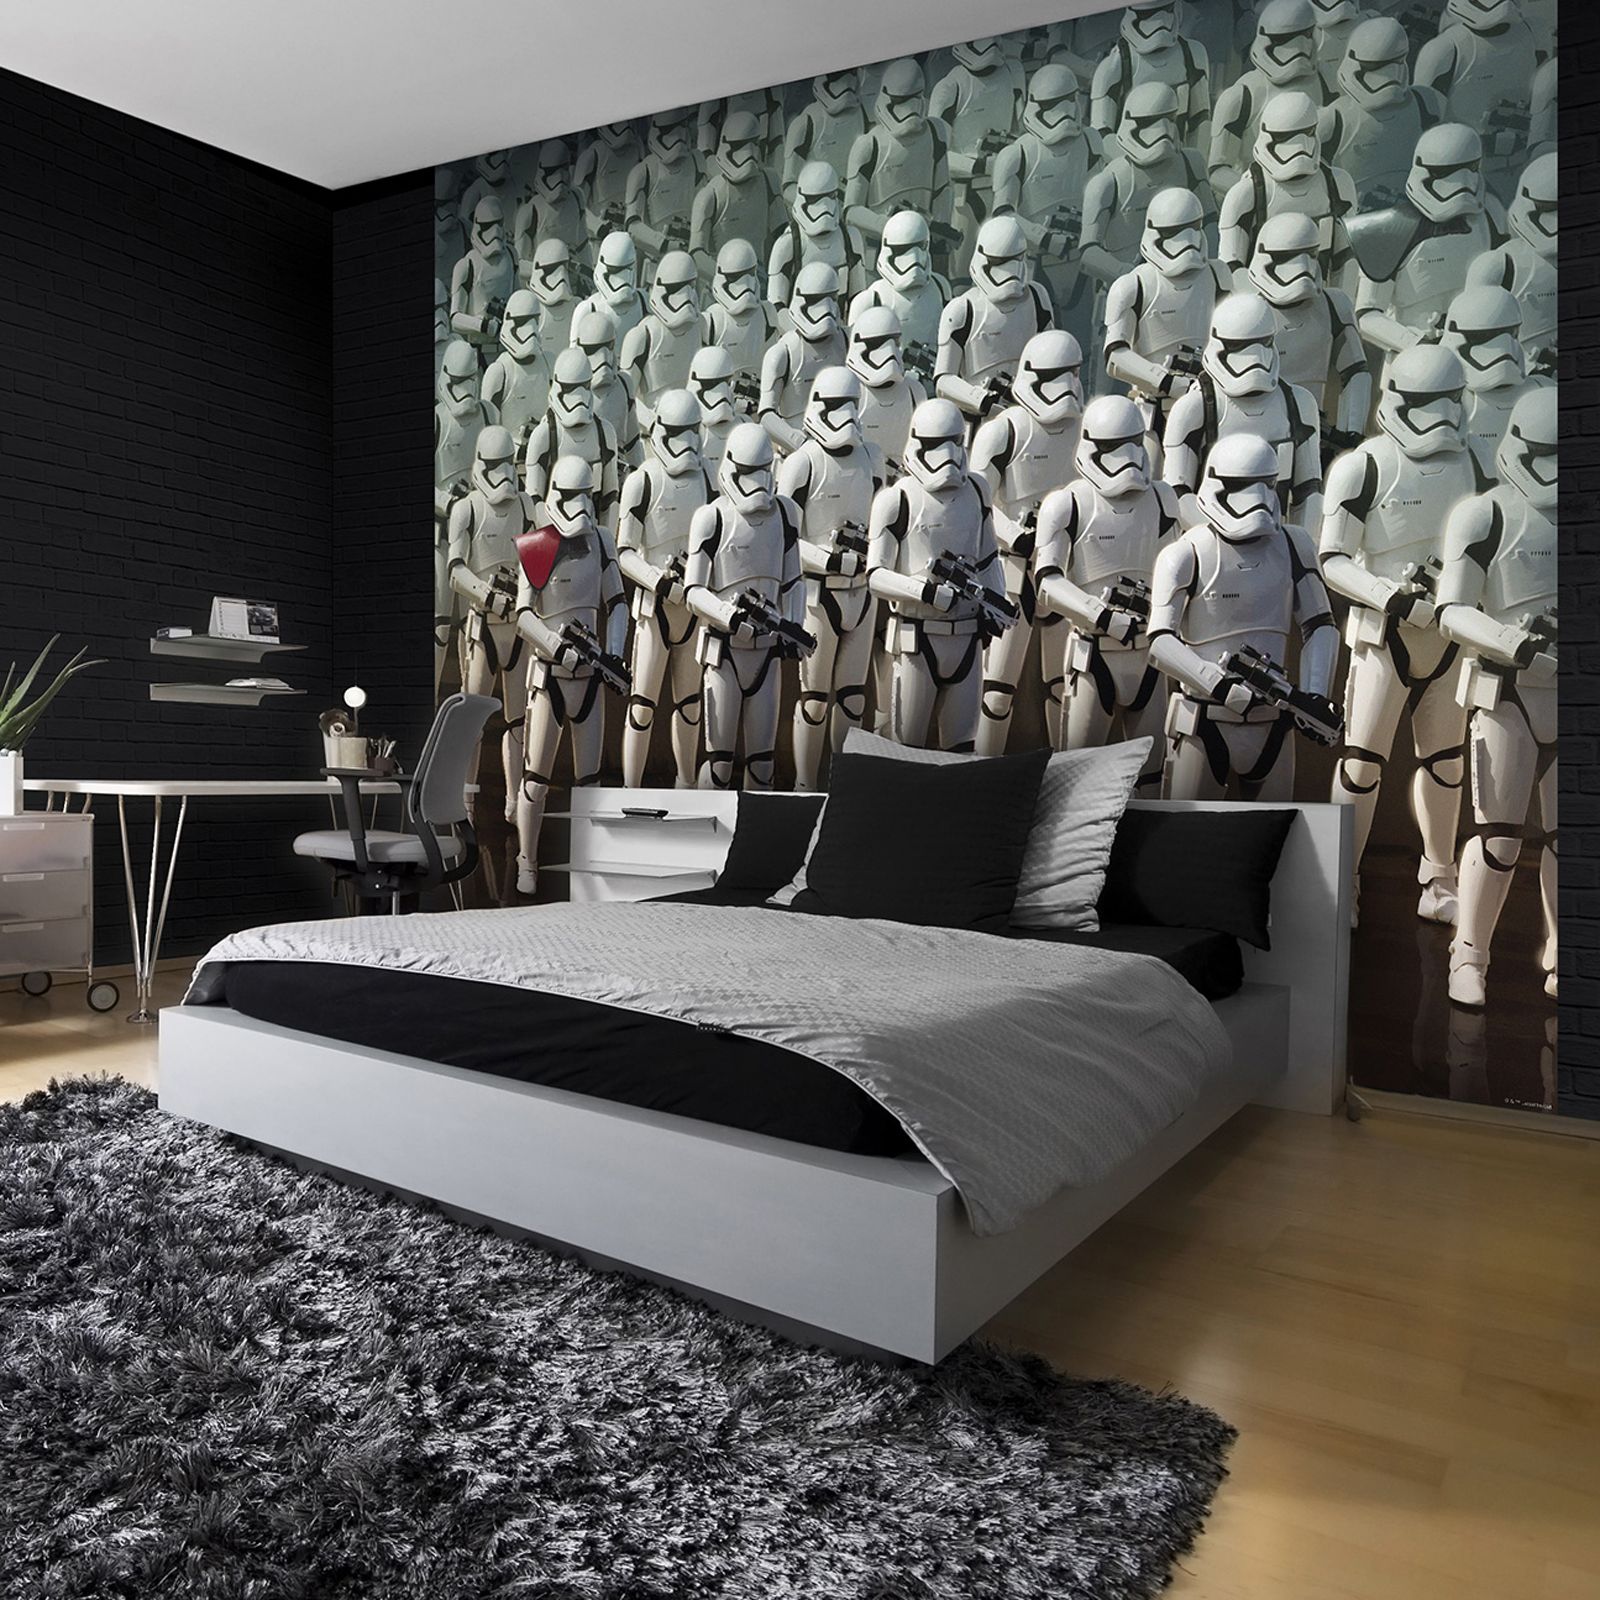 star wars room wallpaper,bedroom,bed,room,furniture,wall